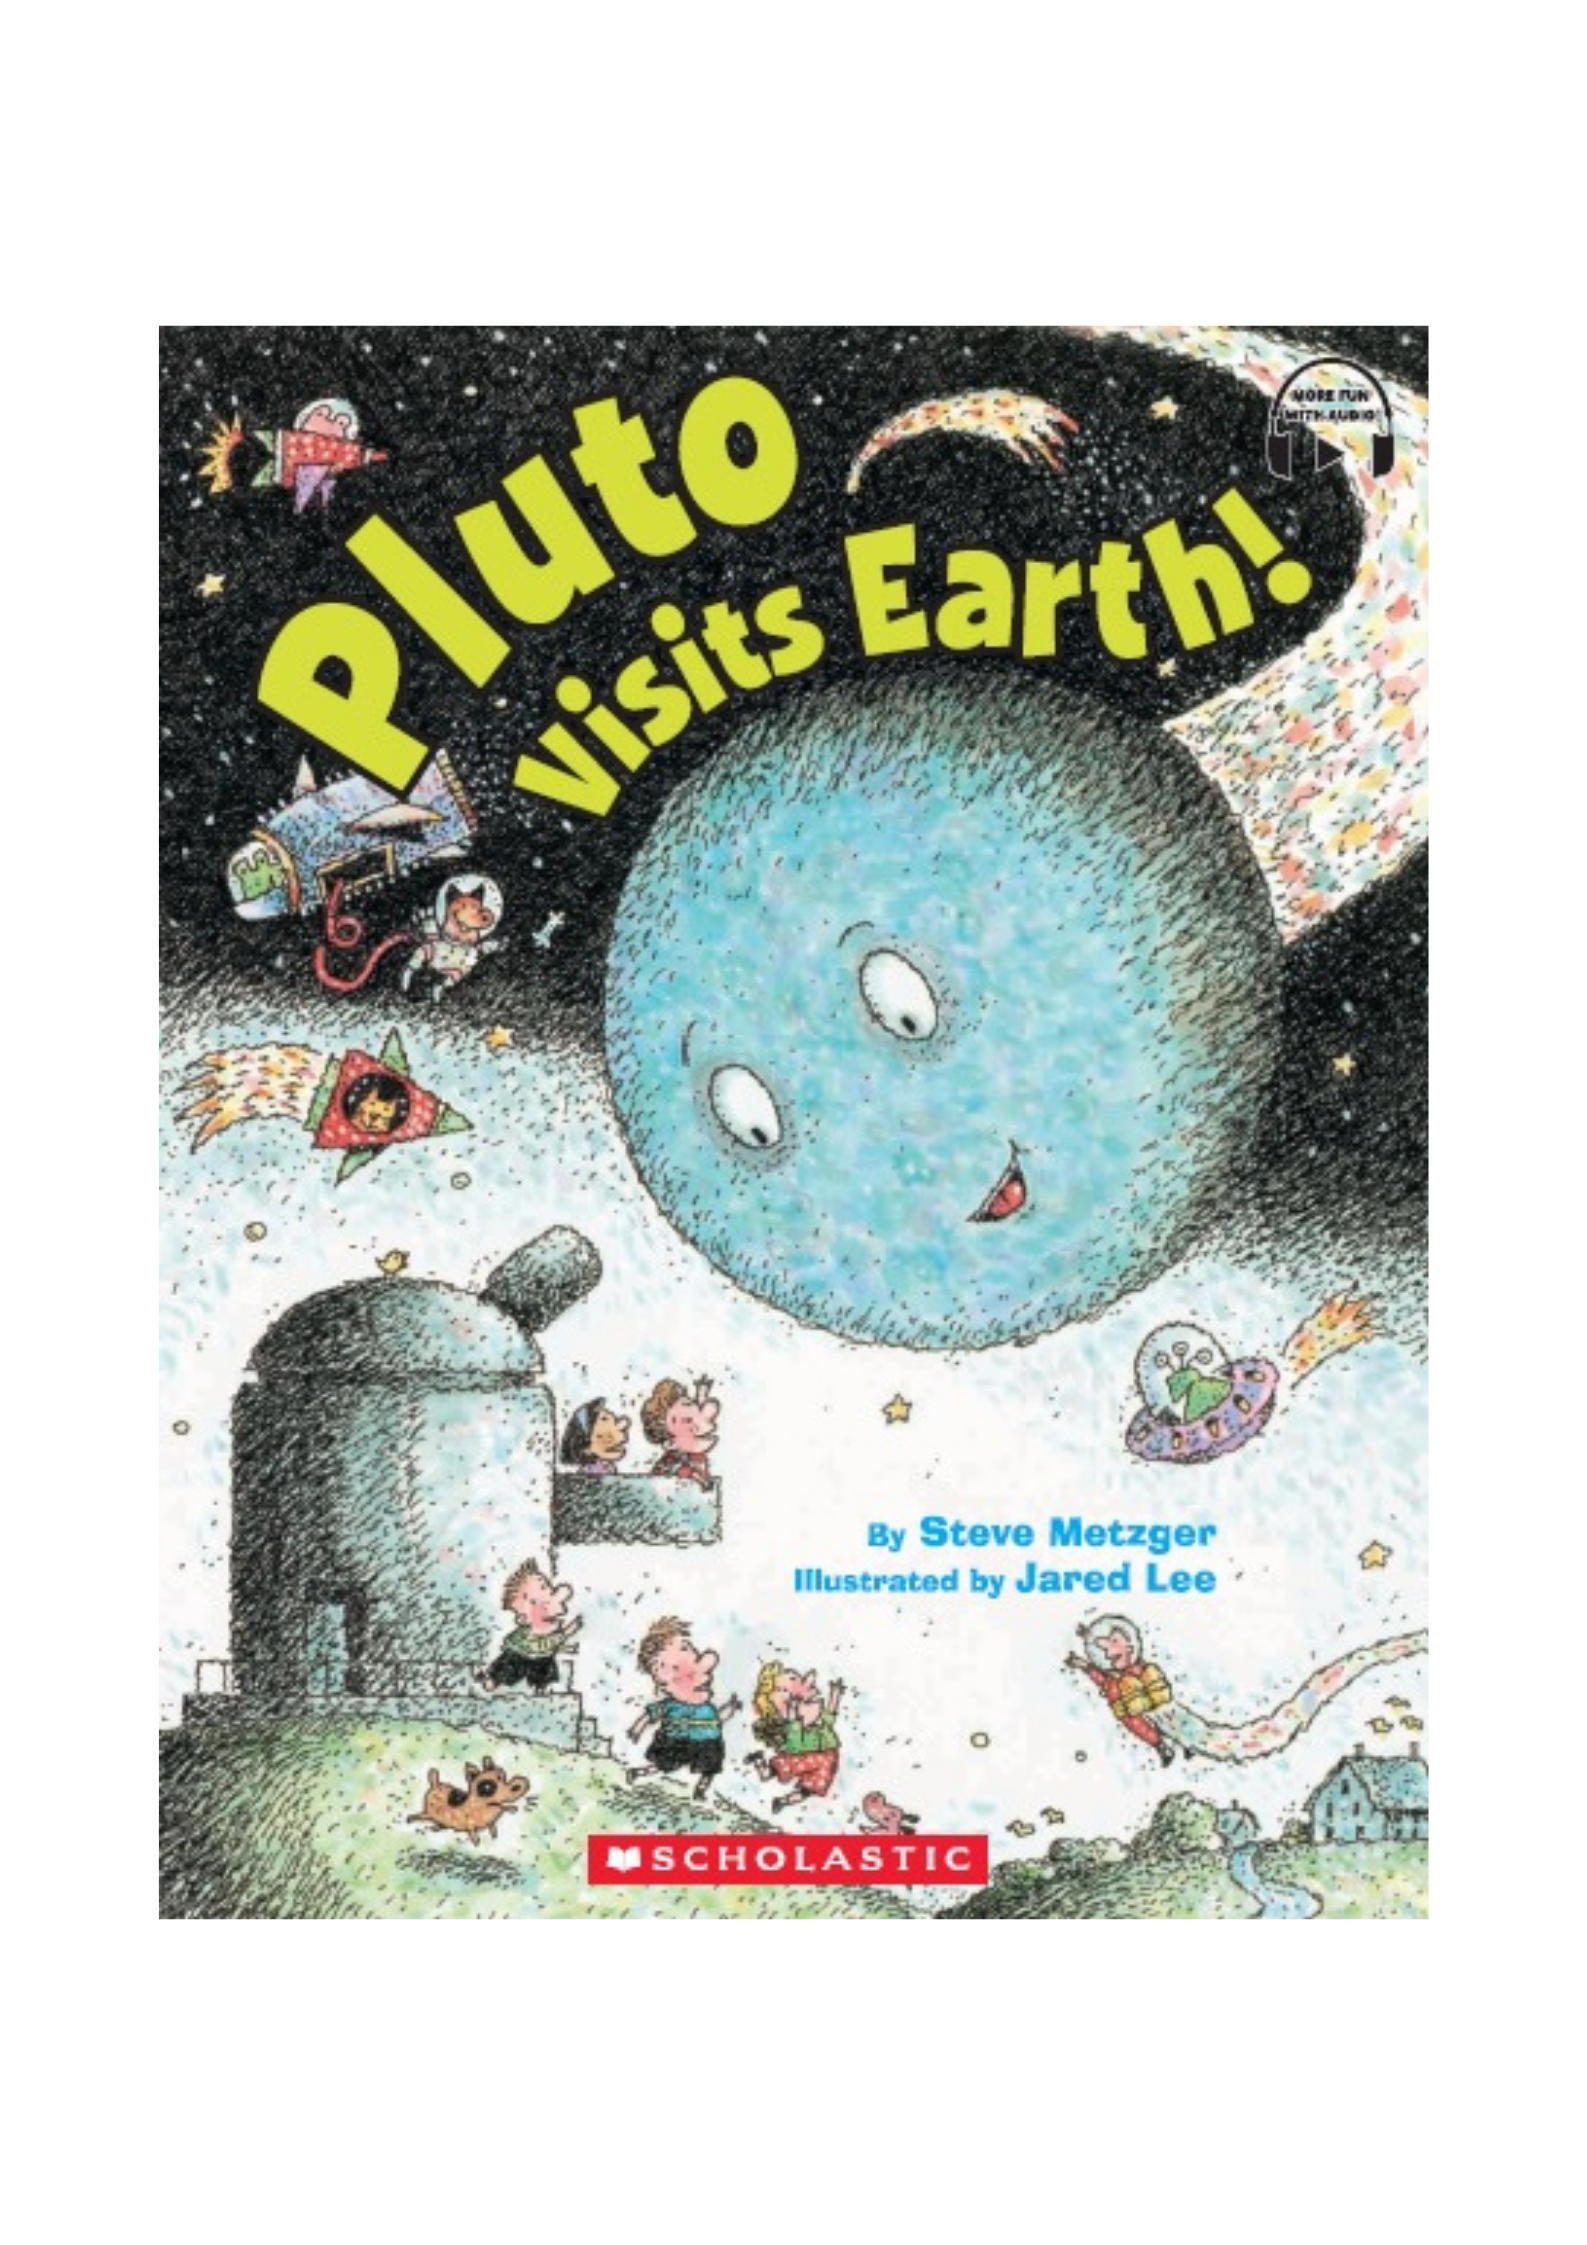 Pluto Visits Earth